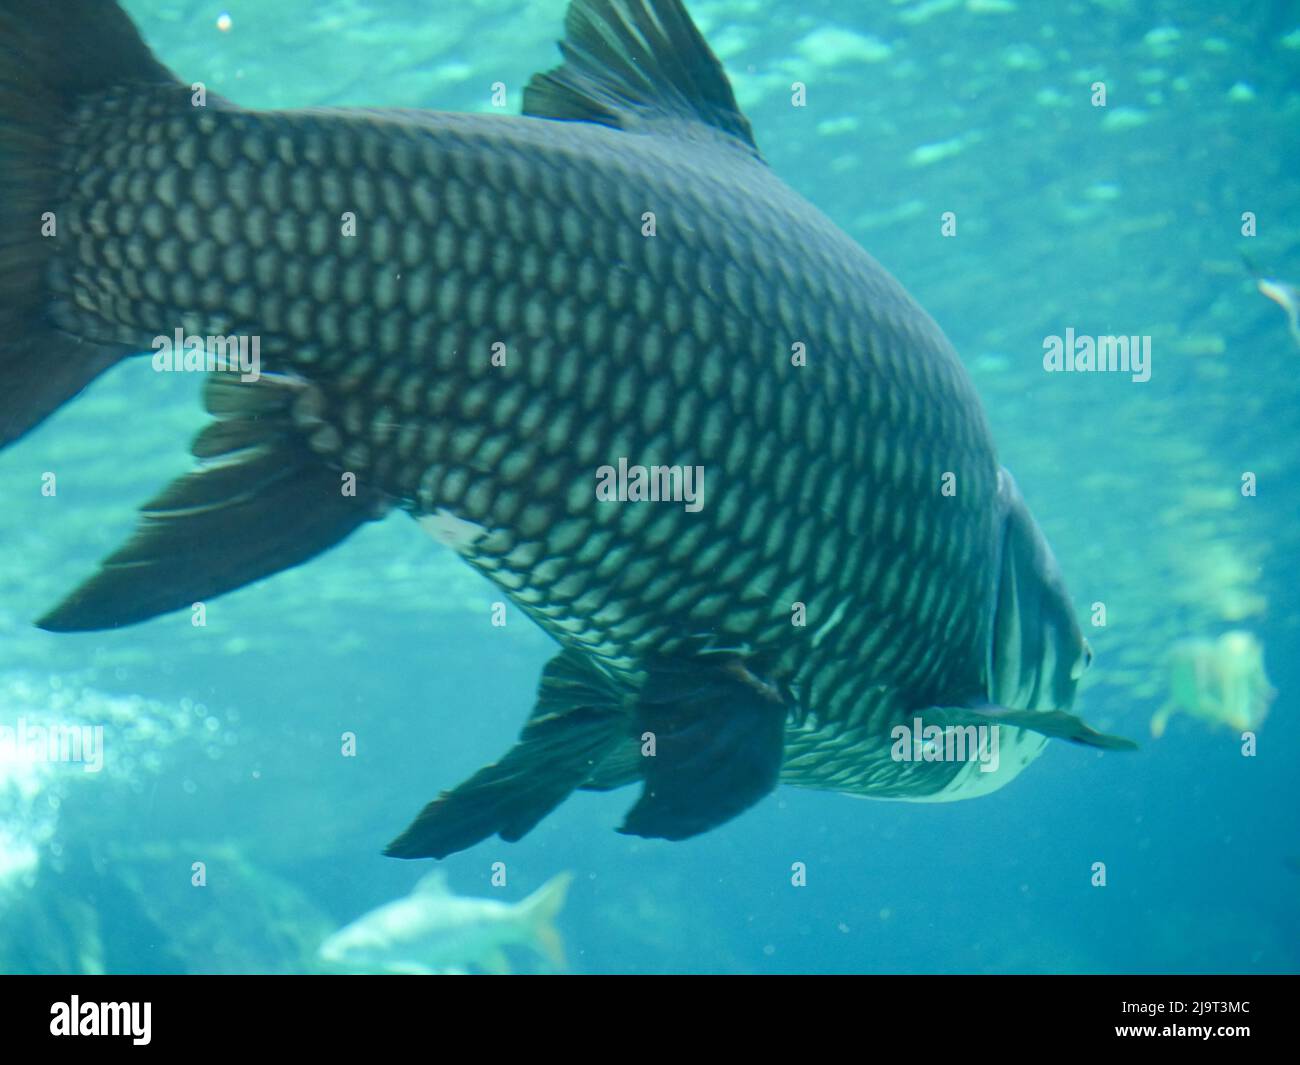 giant siamese carp also known as giant barb, Siamese giant carp, or simply Siamese carp (Catlocarpio siamensis) swimming in big fish tank aquarium Stock Photo